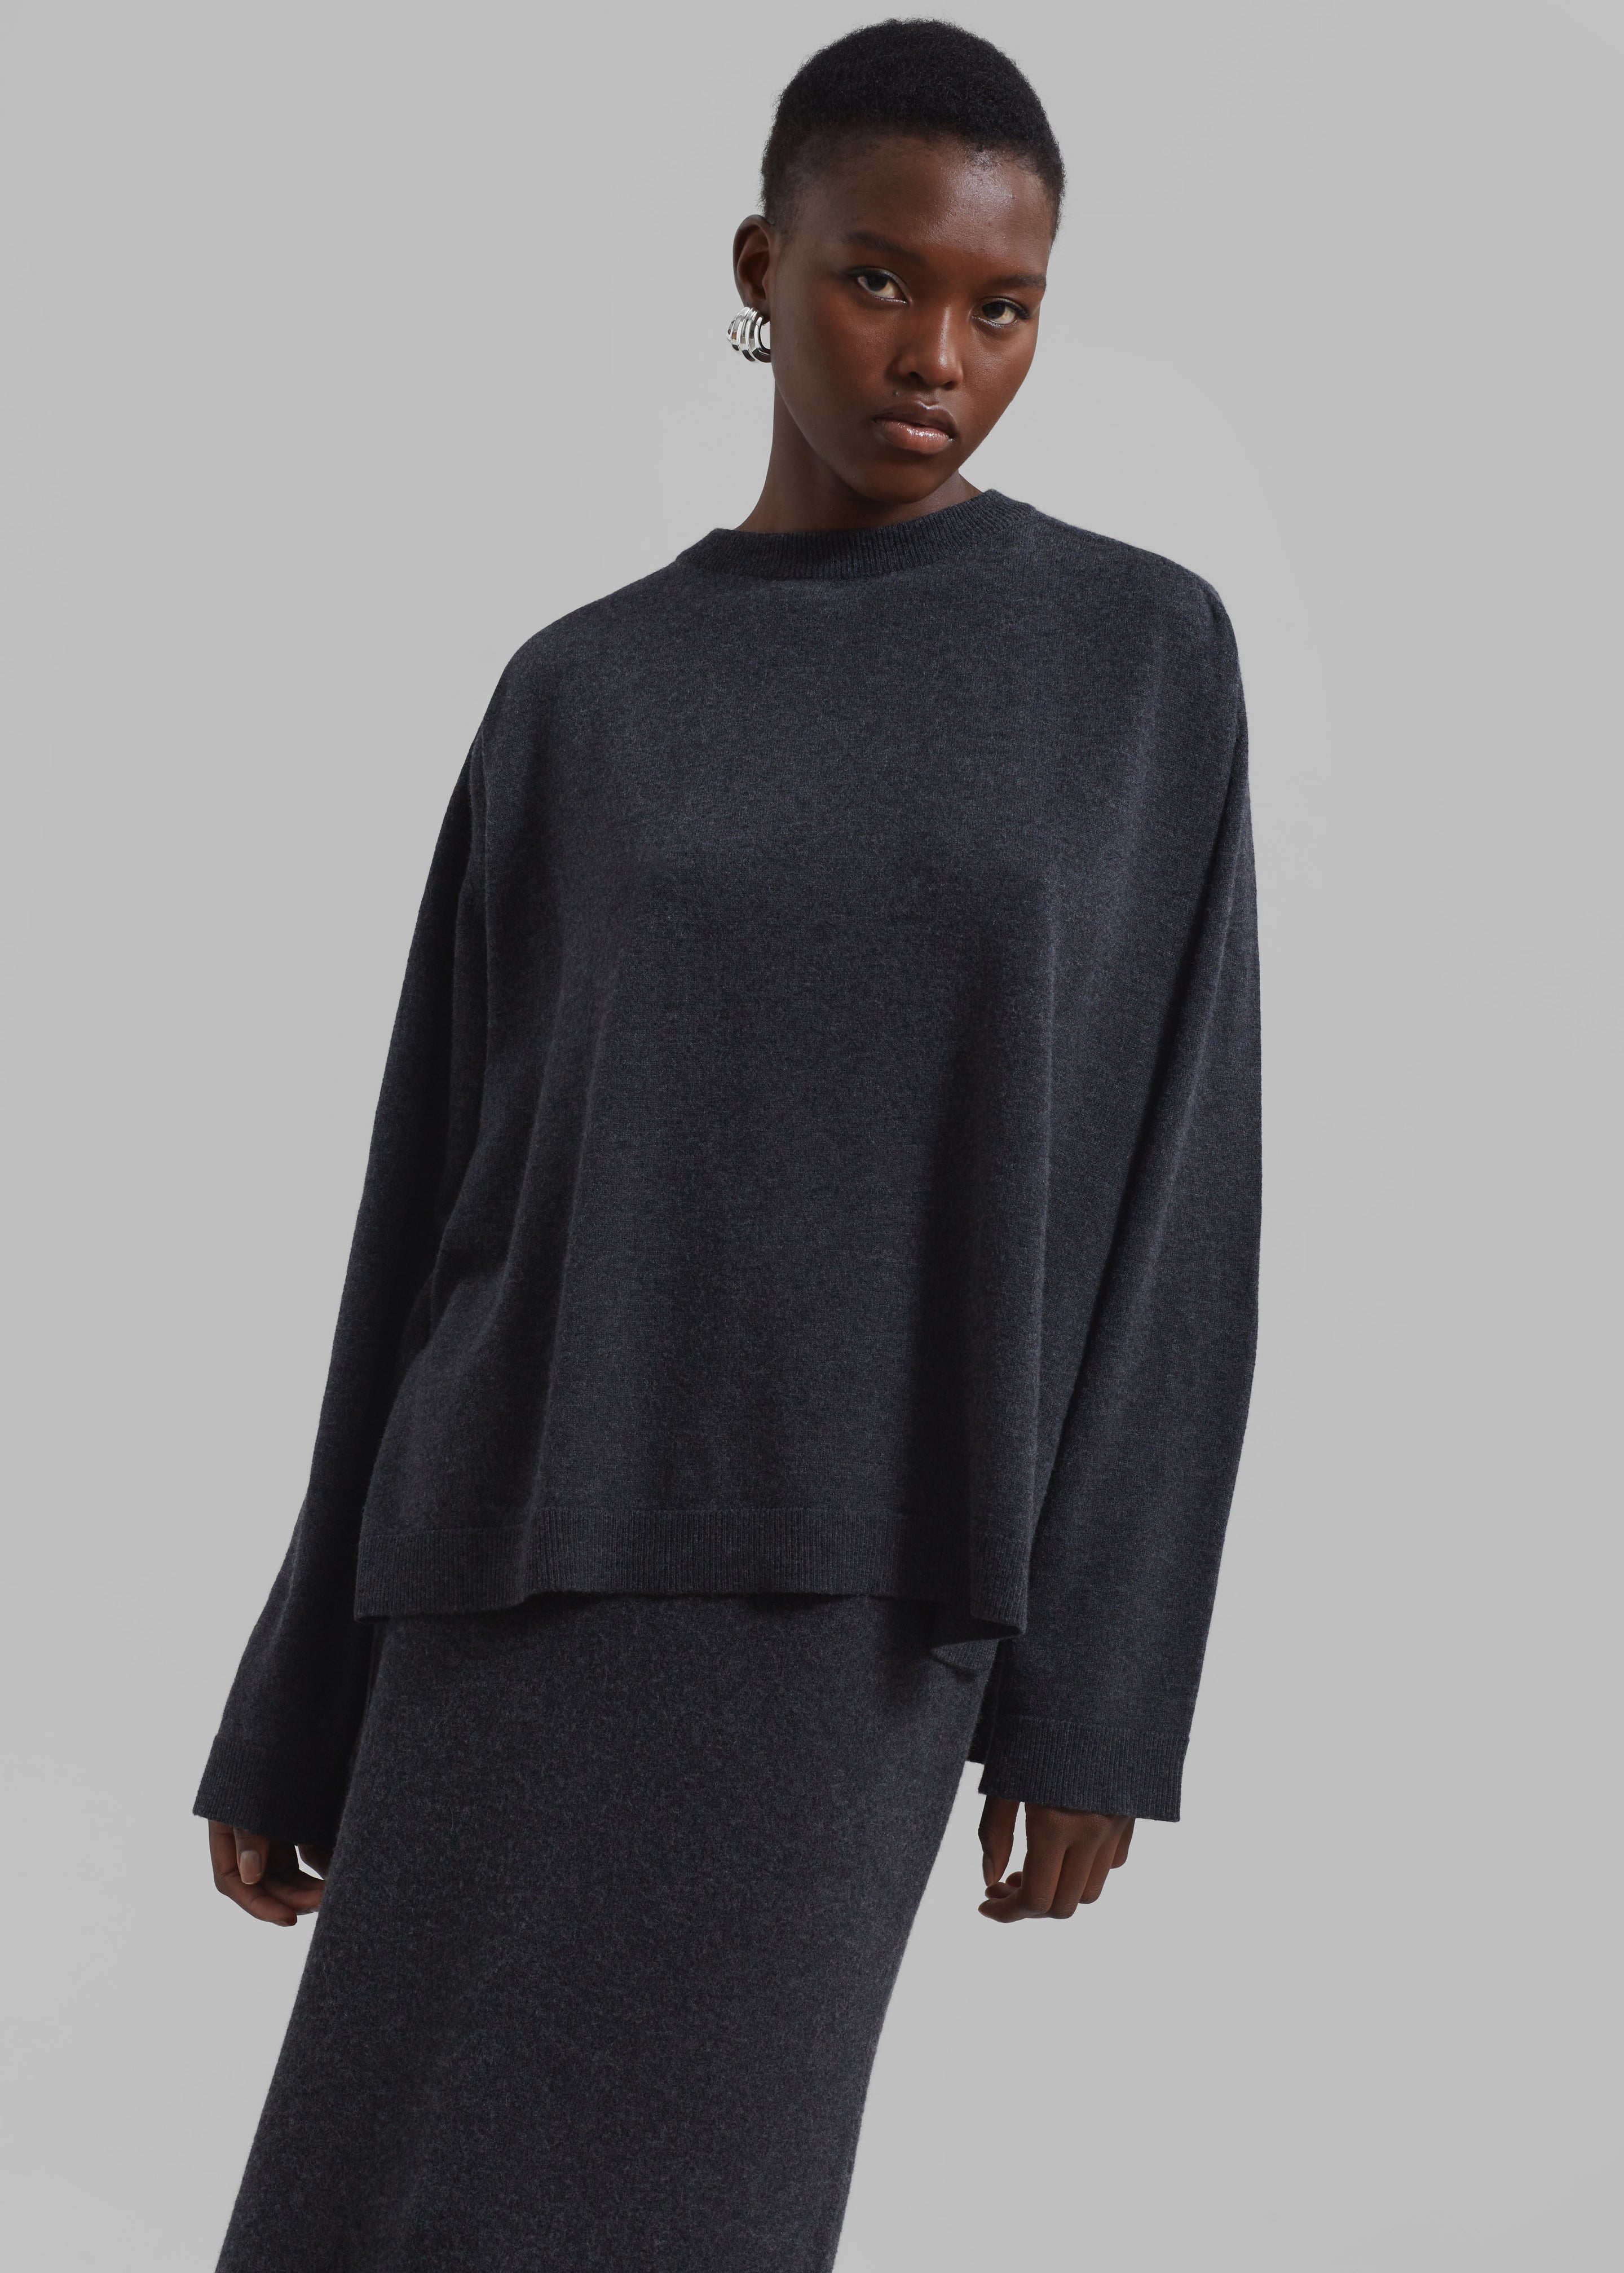 Bellamy Wool Sweater - Charcoal - 1